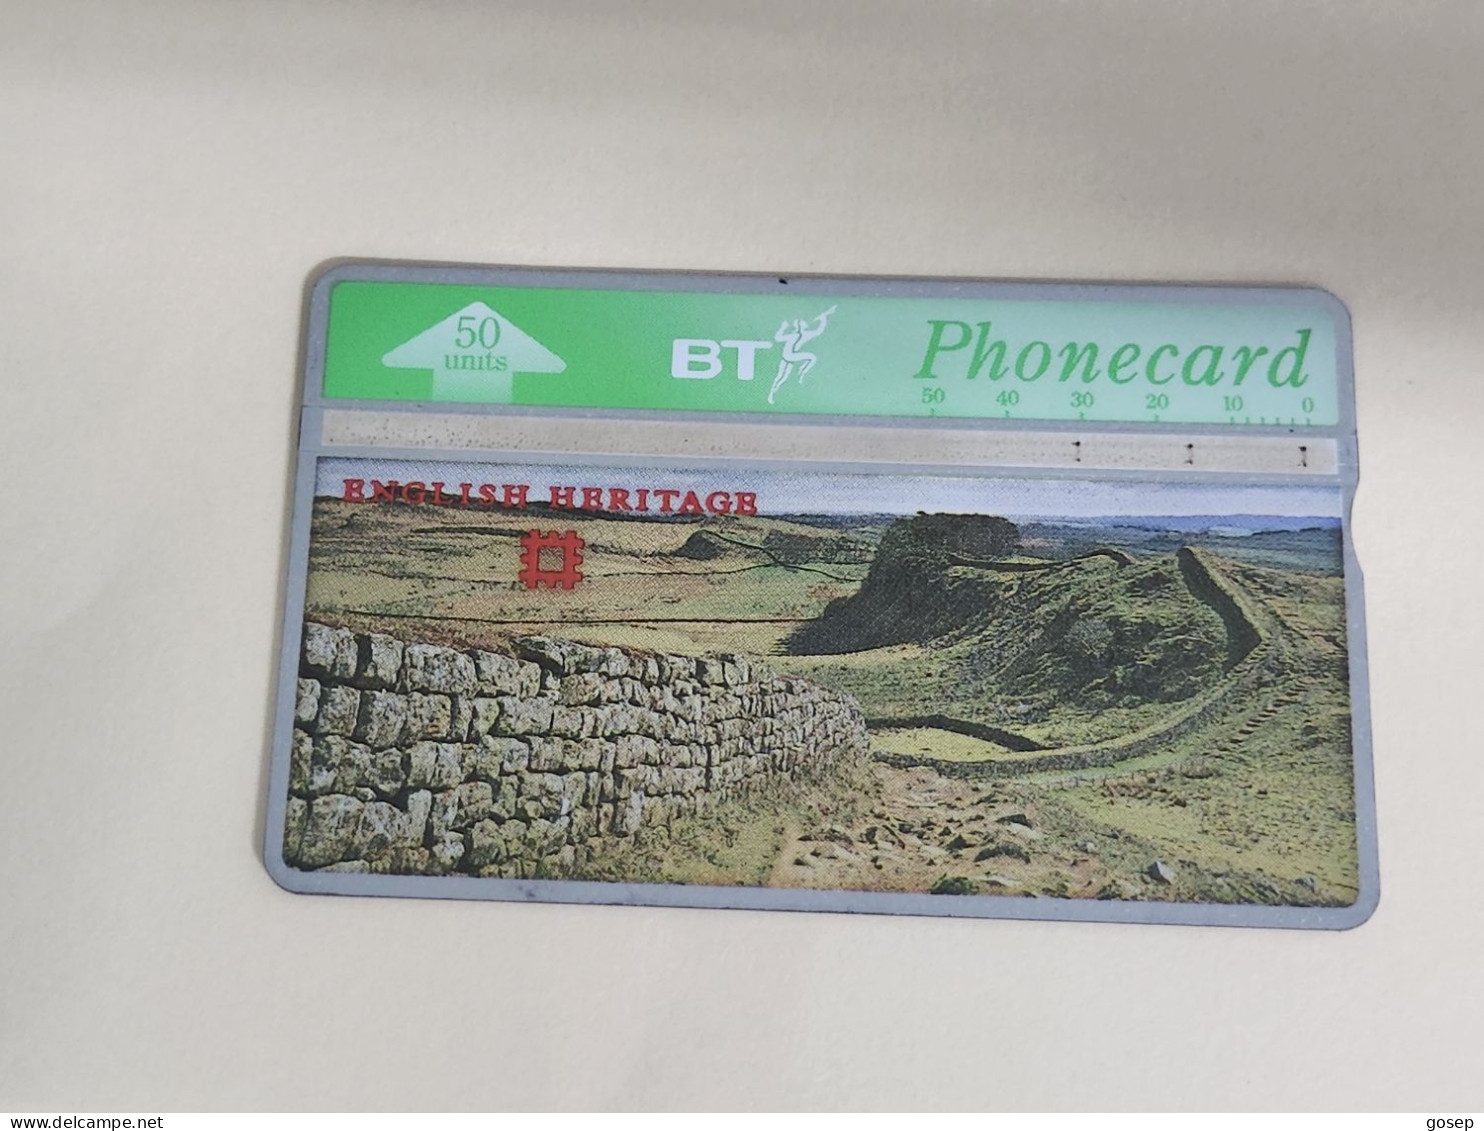 United Kingdom-(BTA107)-HERITAGE-Hadrian's Wall-(176)(50units)(527K18056)price Cataloge3.00£-used+1card Prepiad Free - BT Publicitaire Uitgaven